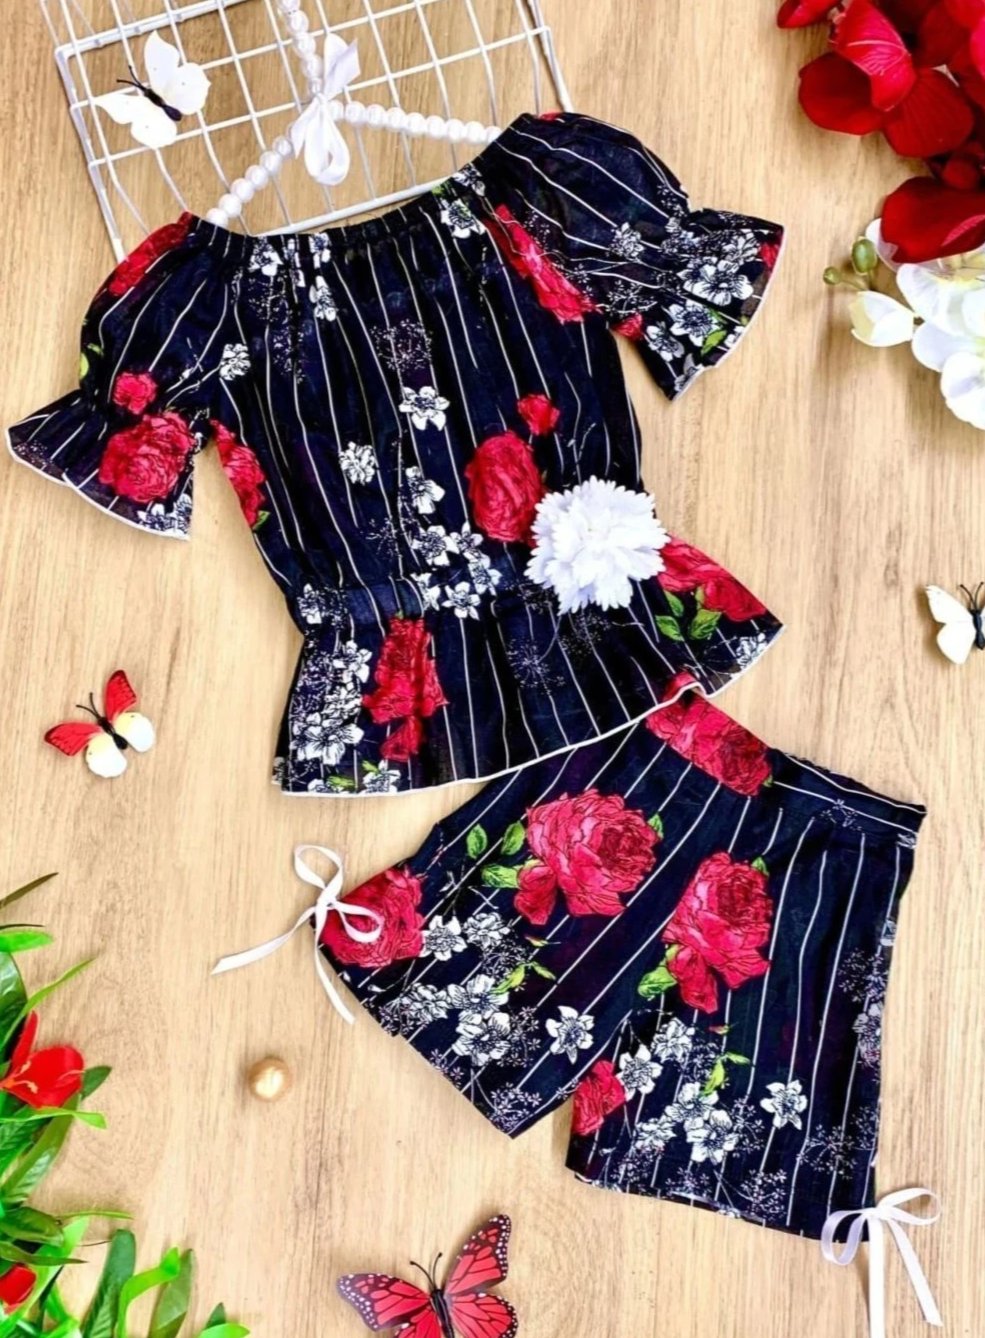 Toddler Spring Outfits | Girls Pinstripe Floral Top & Shorts Set